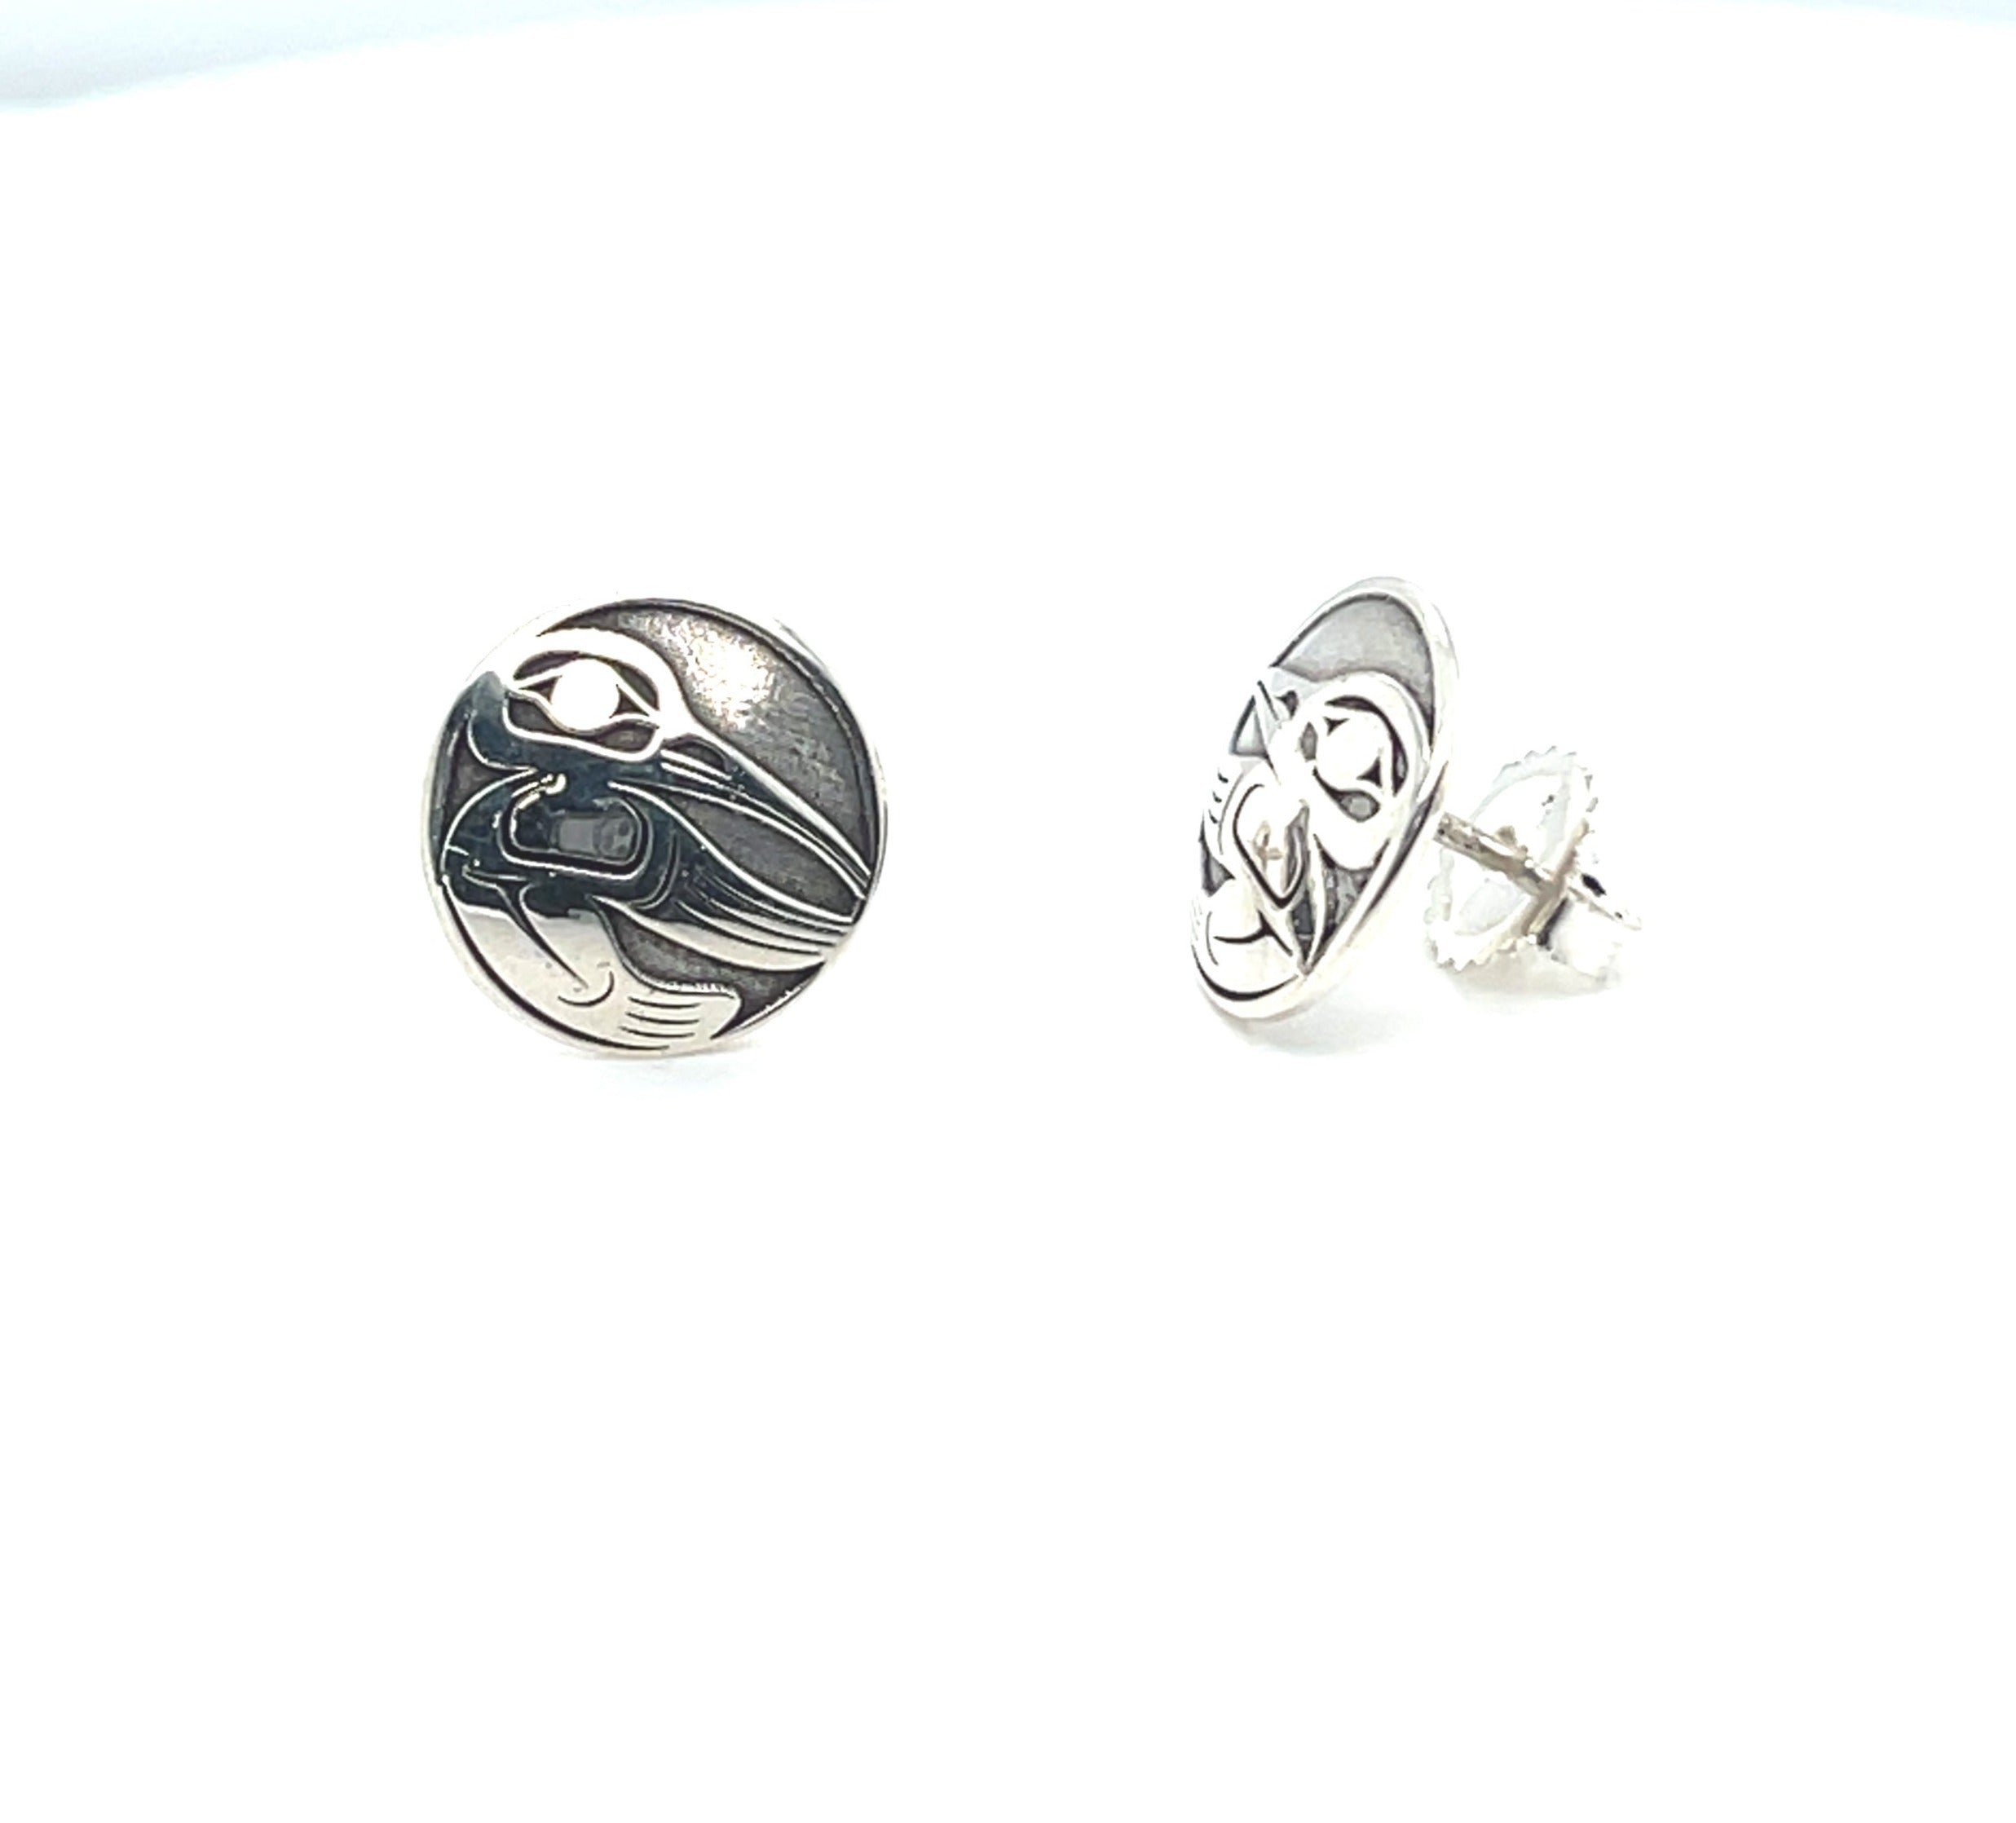 Earrings - Sterling Silver - Studs - Round - Hummingbird